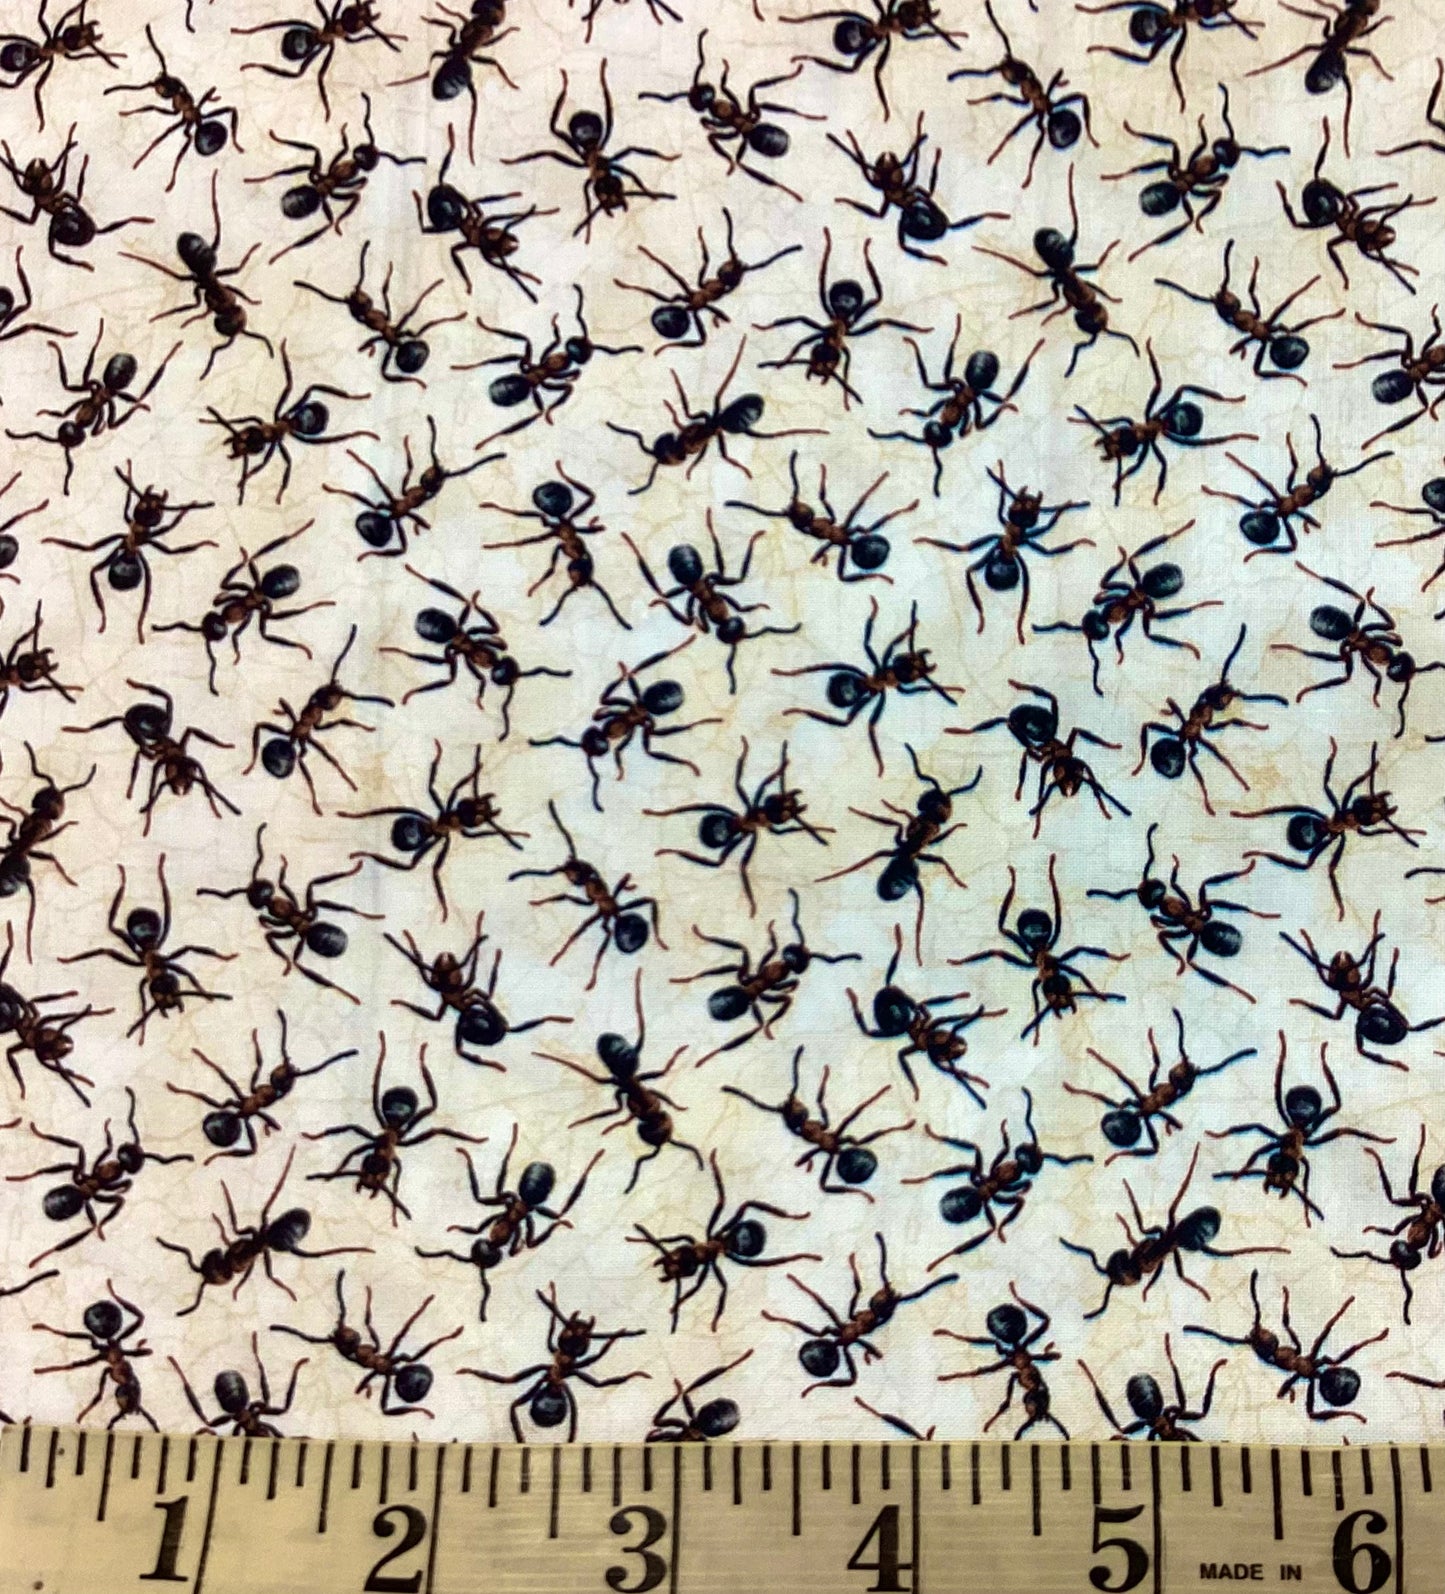 Fabric - You Bug Me (Ants)